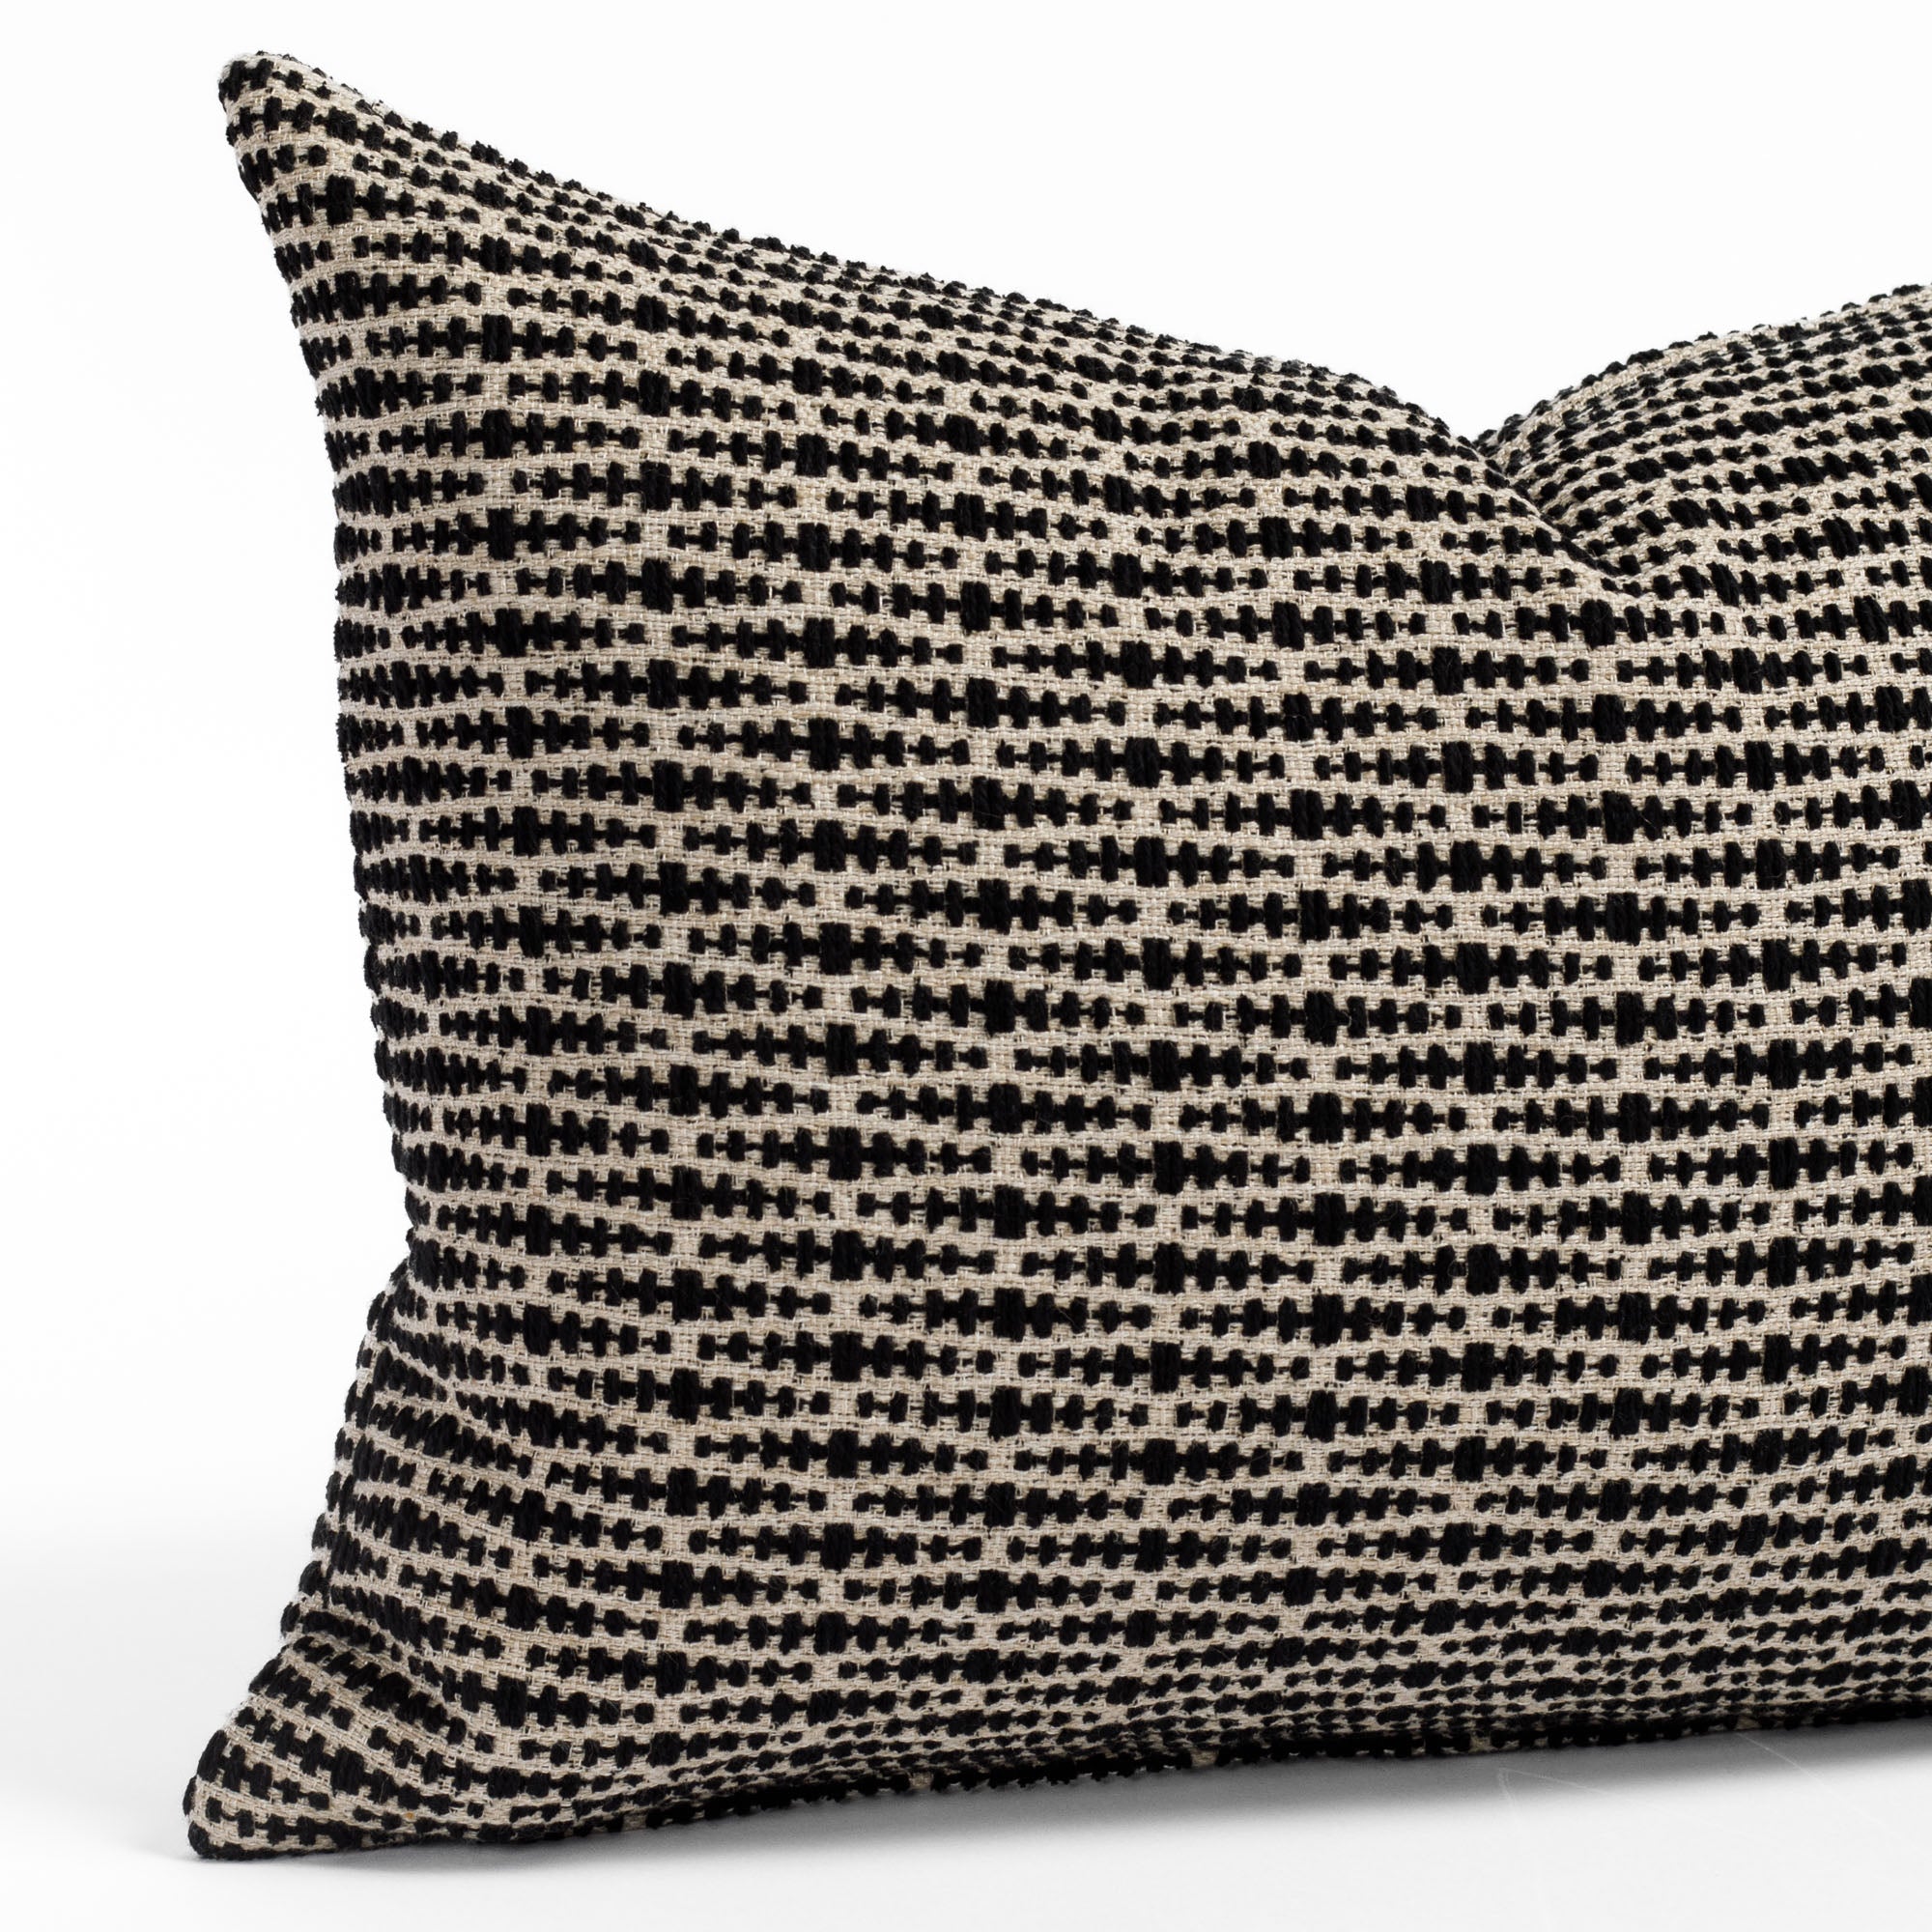 a black and tan geometric patterned lumbar pillow : close up view